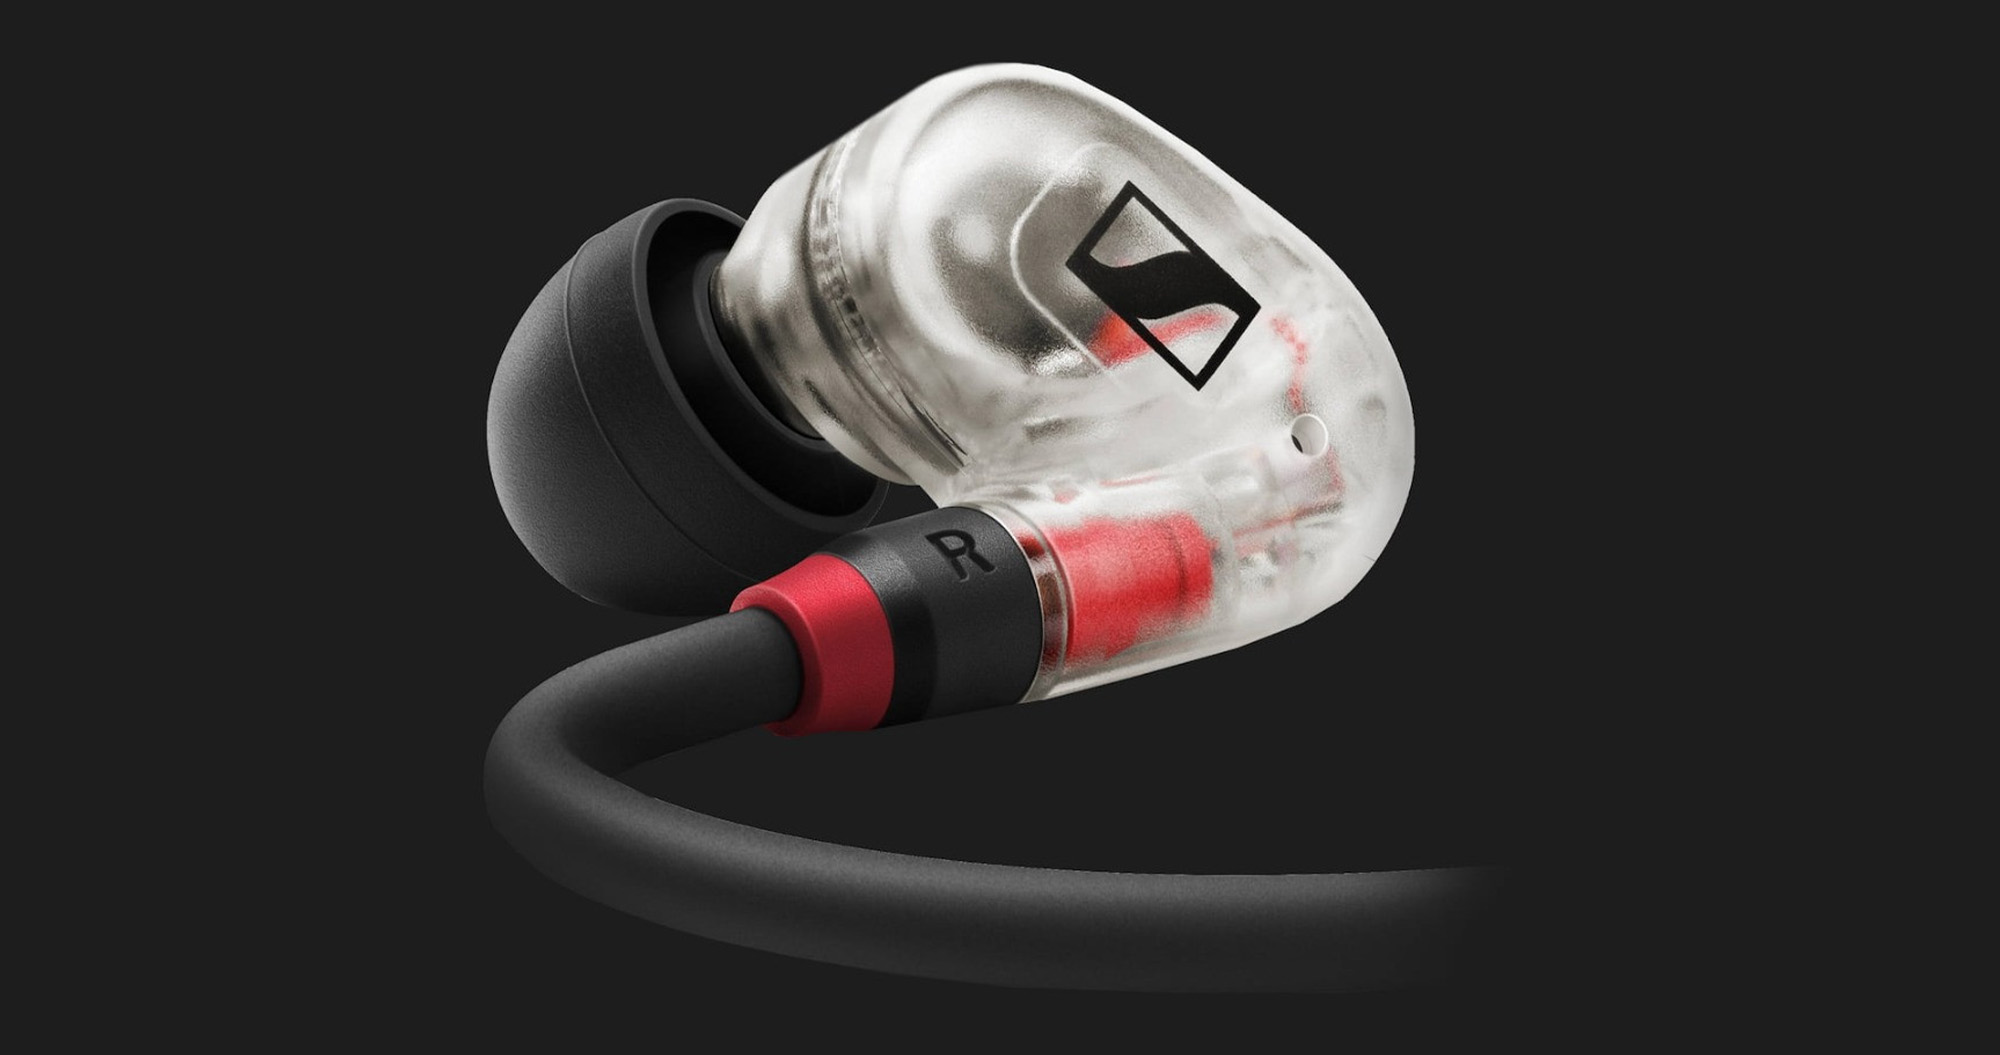 Навушники Sennheiser IE 100 PRO Wireless (Red)